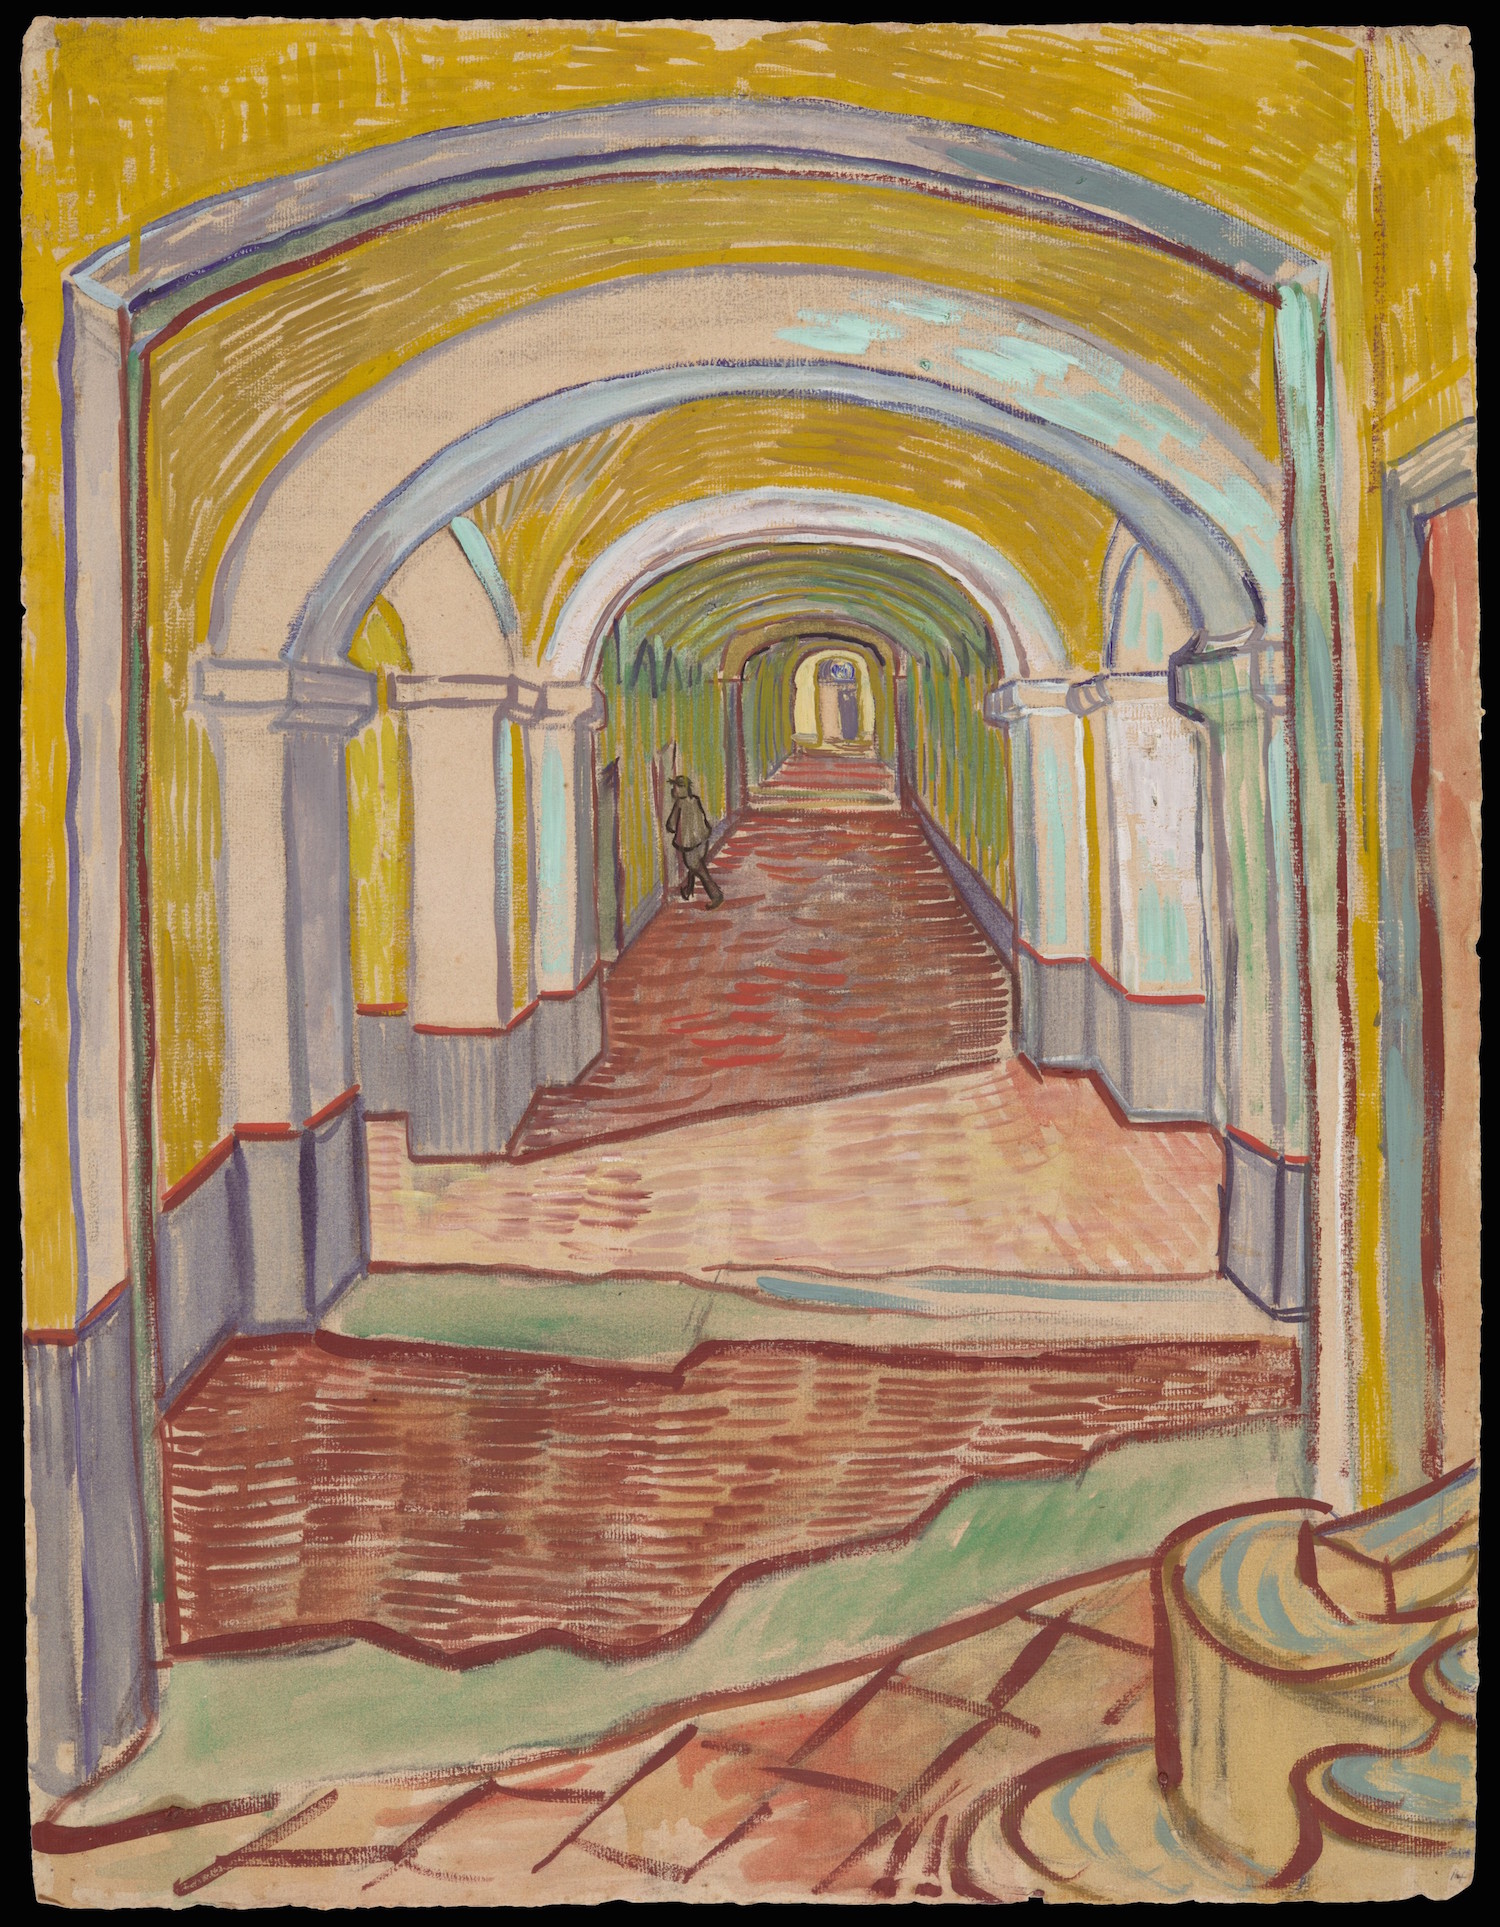 Akıl Hastanesinde Koridor by Vincent van Gogh - 1889 - 65.1 x 49.1 cm 